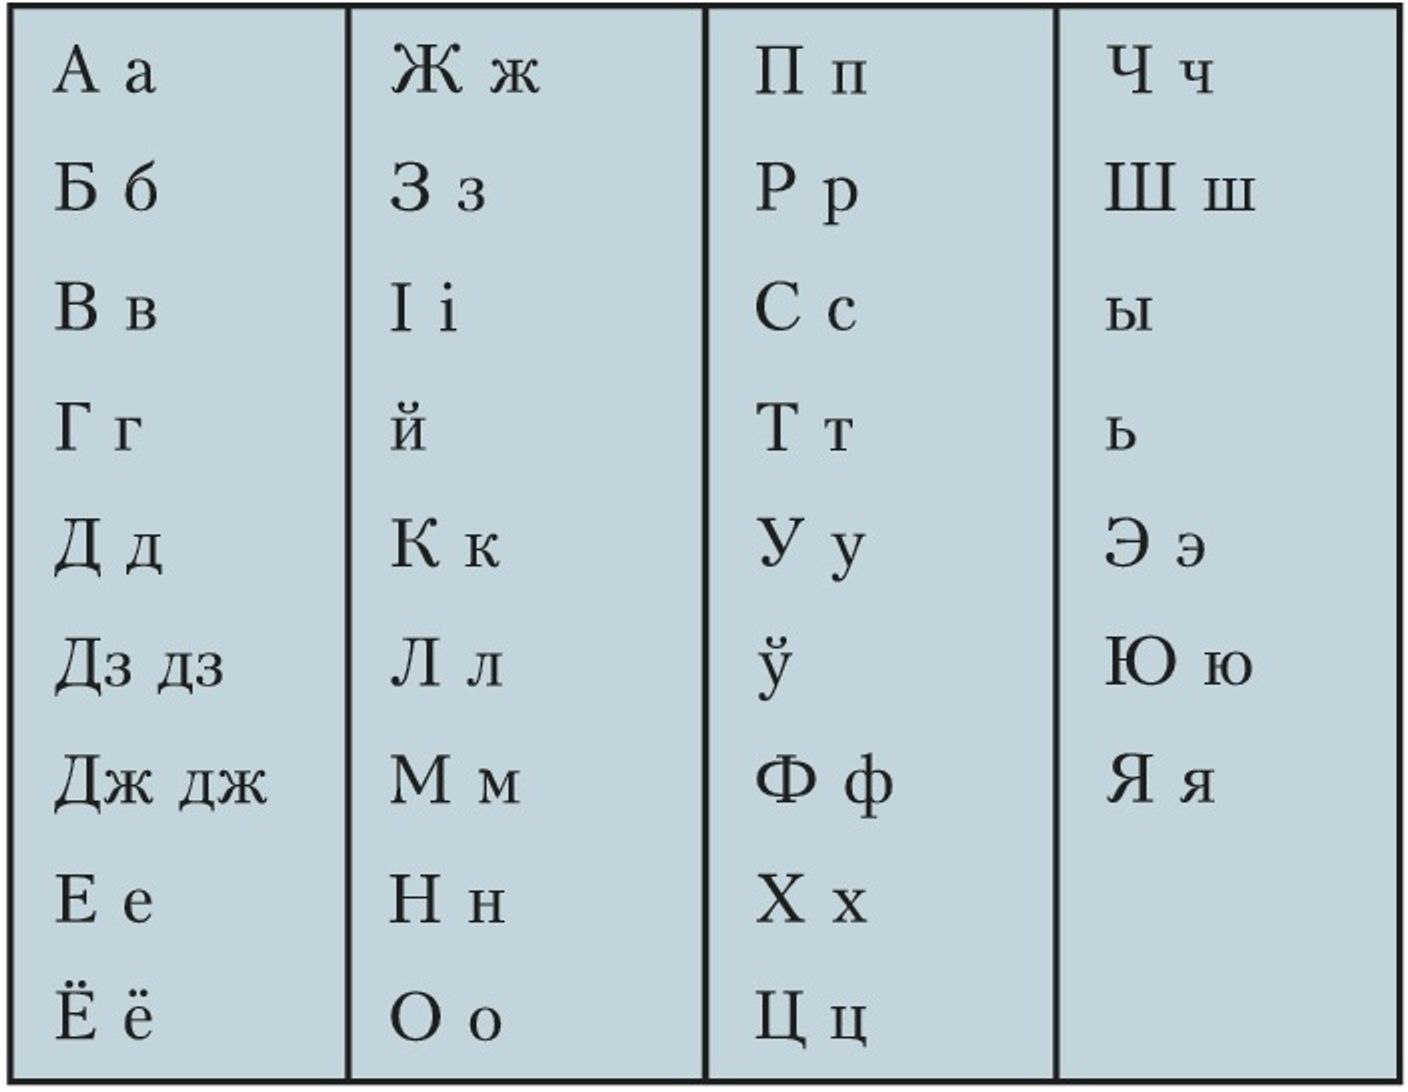 The modern Cyrillic Belarusian alphabet